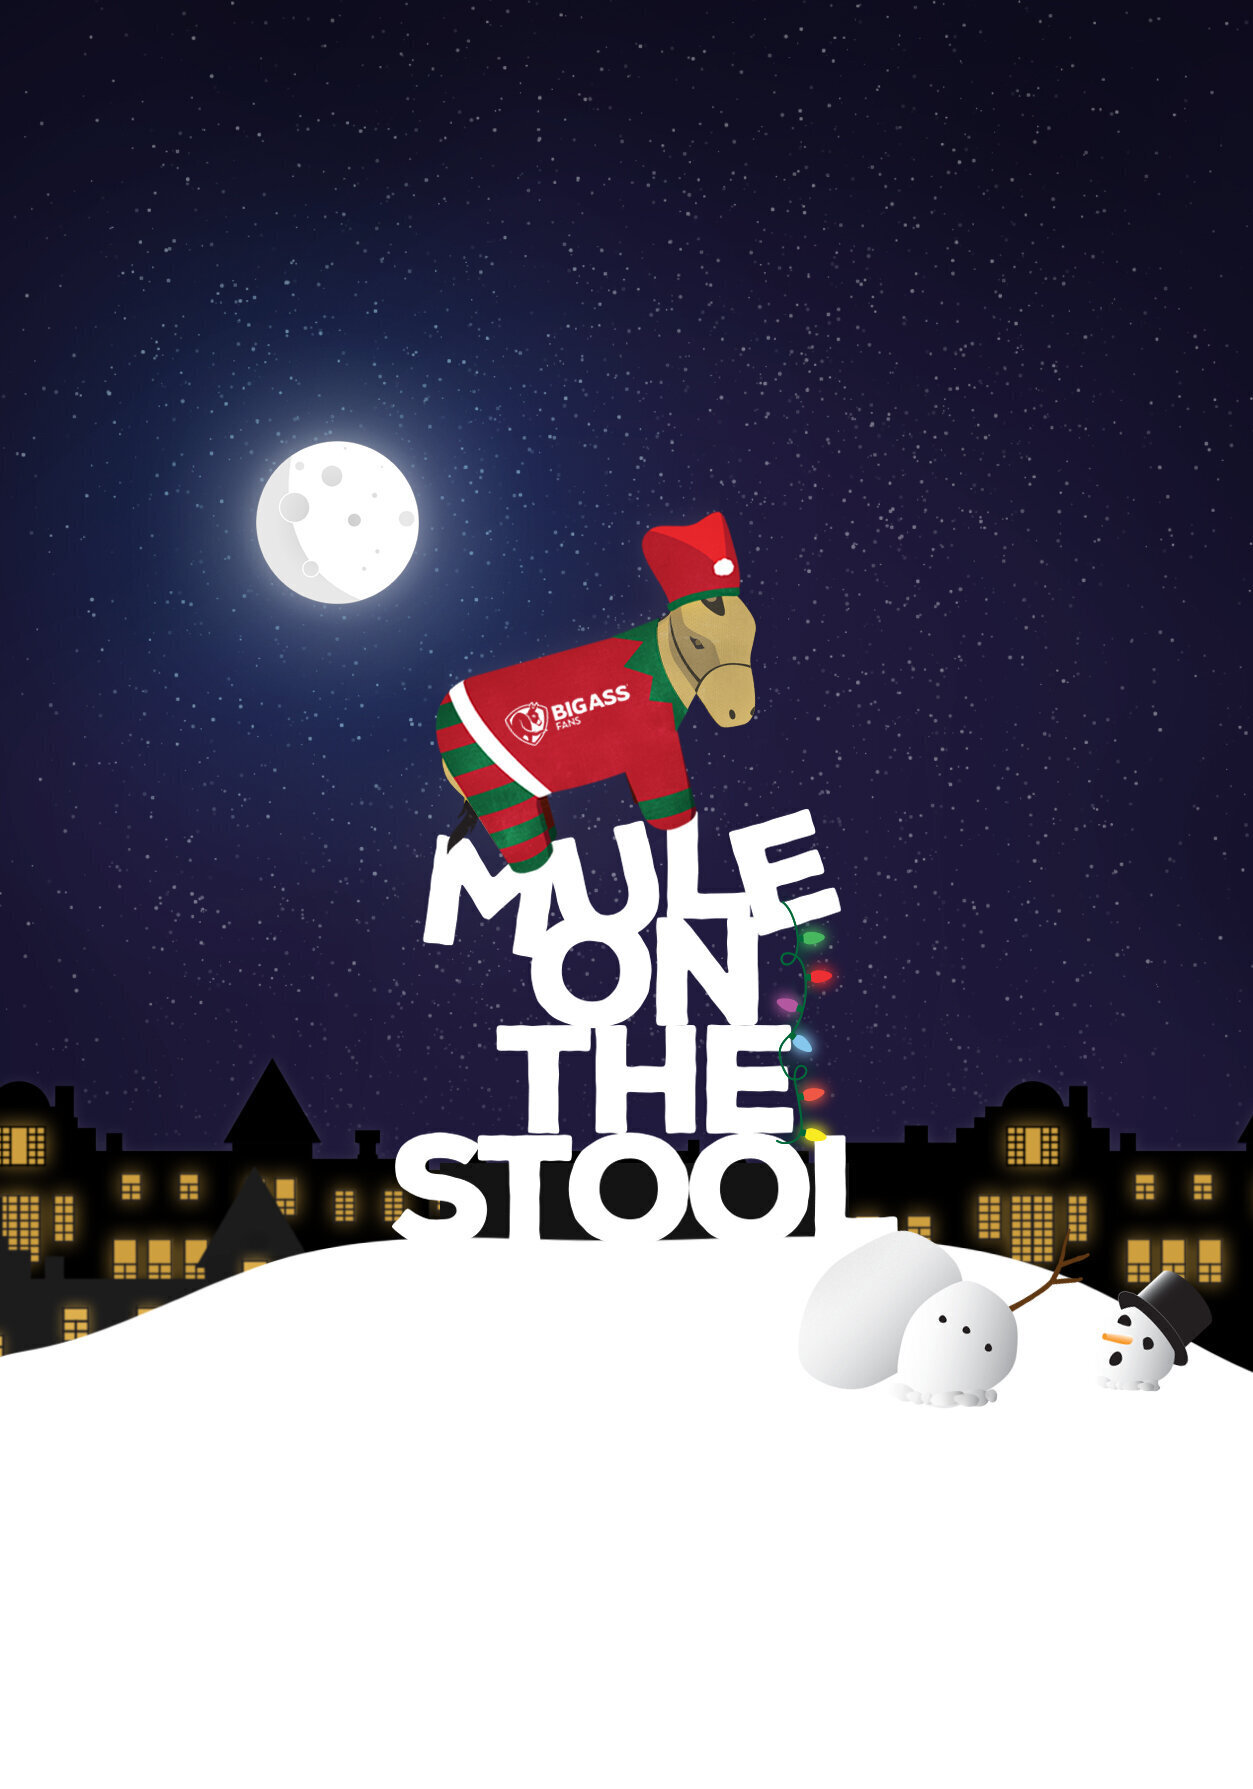 Fun-holiday-marketing-illustration